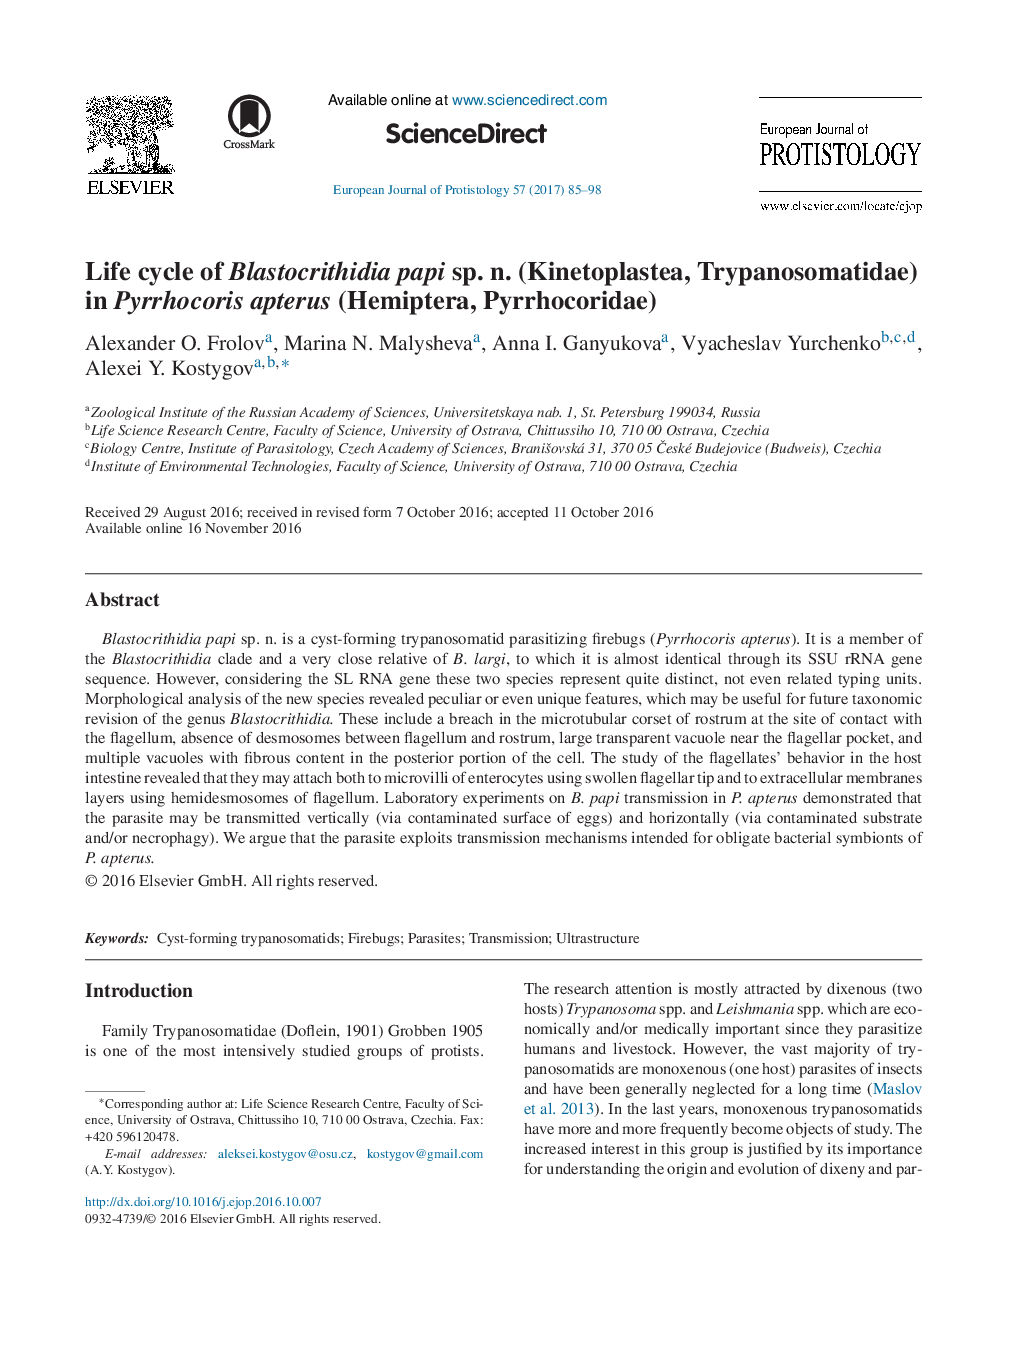 Life cycle of Blastocrithidia papi sp. n. (Kinetoplastea, Trypanosomatidae) in Pyrrhocoris apterus (Hemiptera, Pyrrhocoridae)